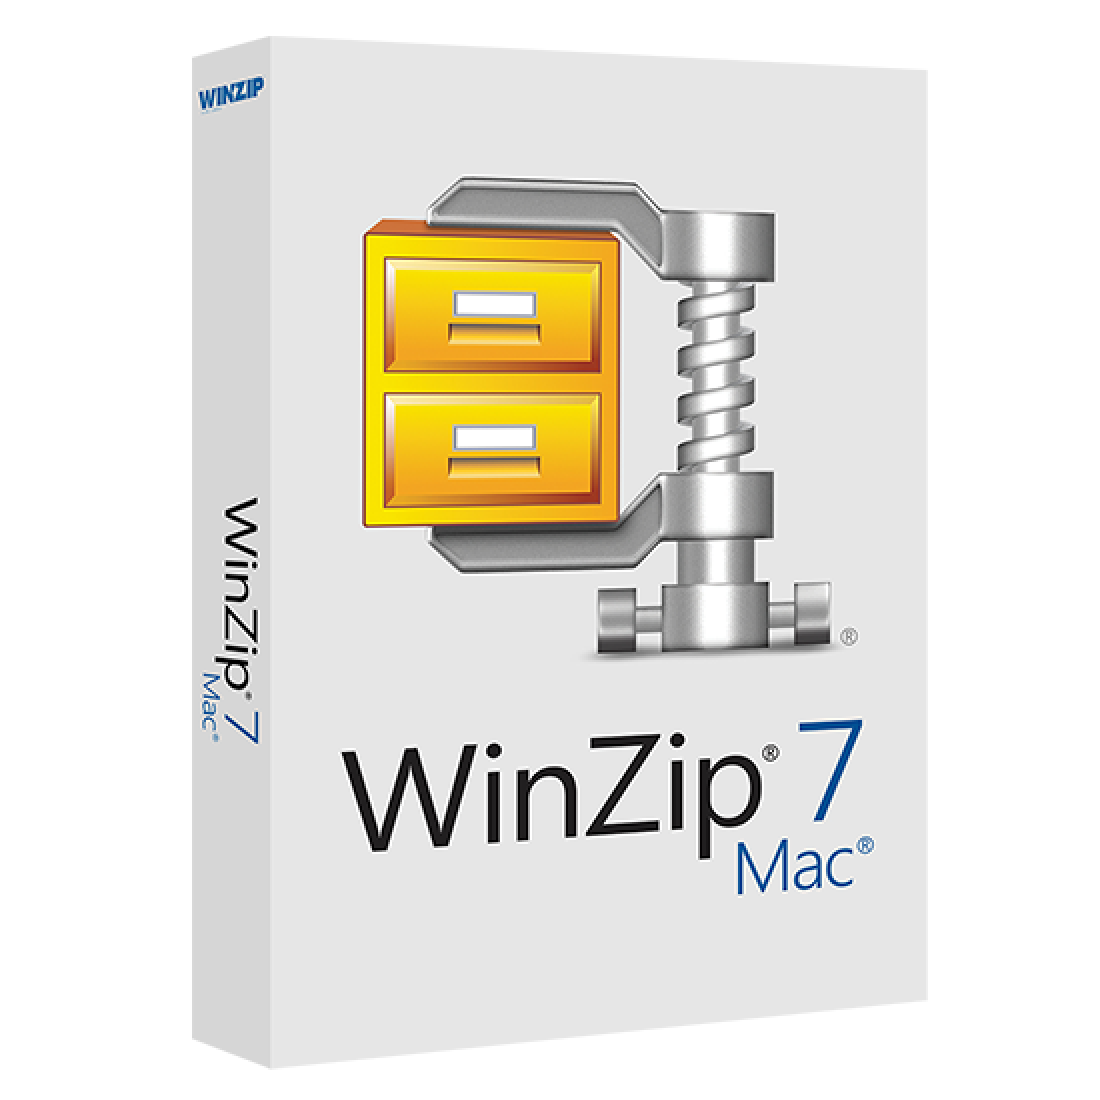 winzip free download cnet mac